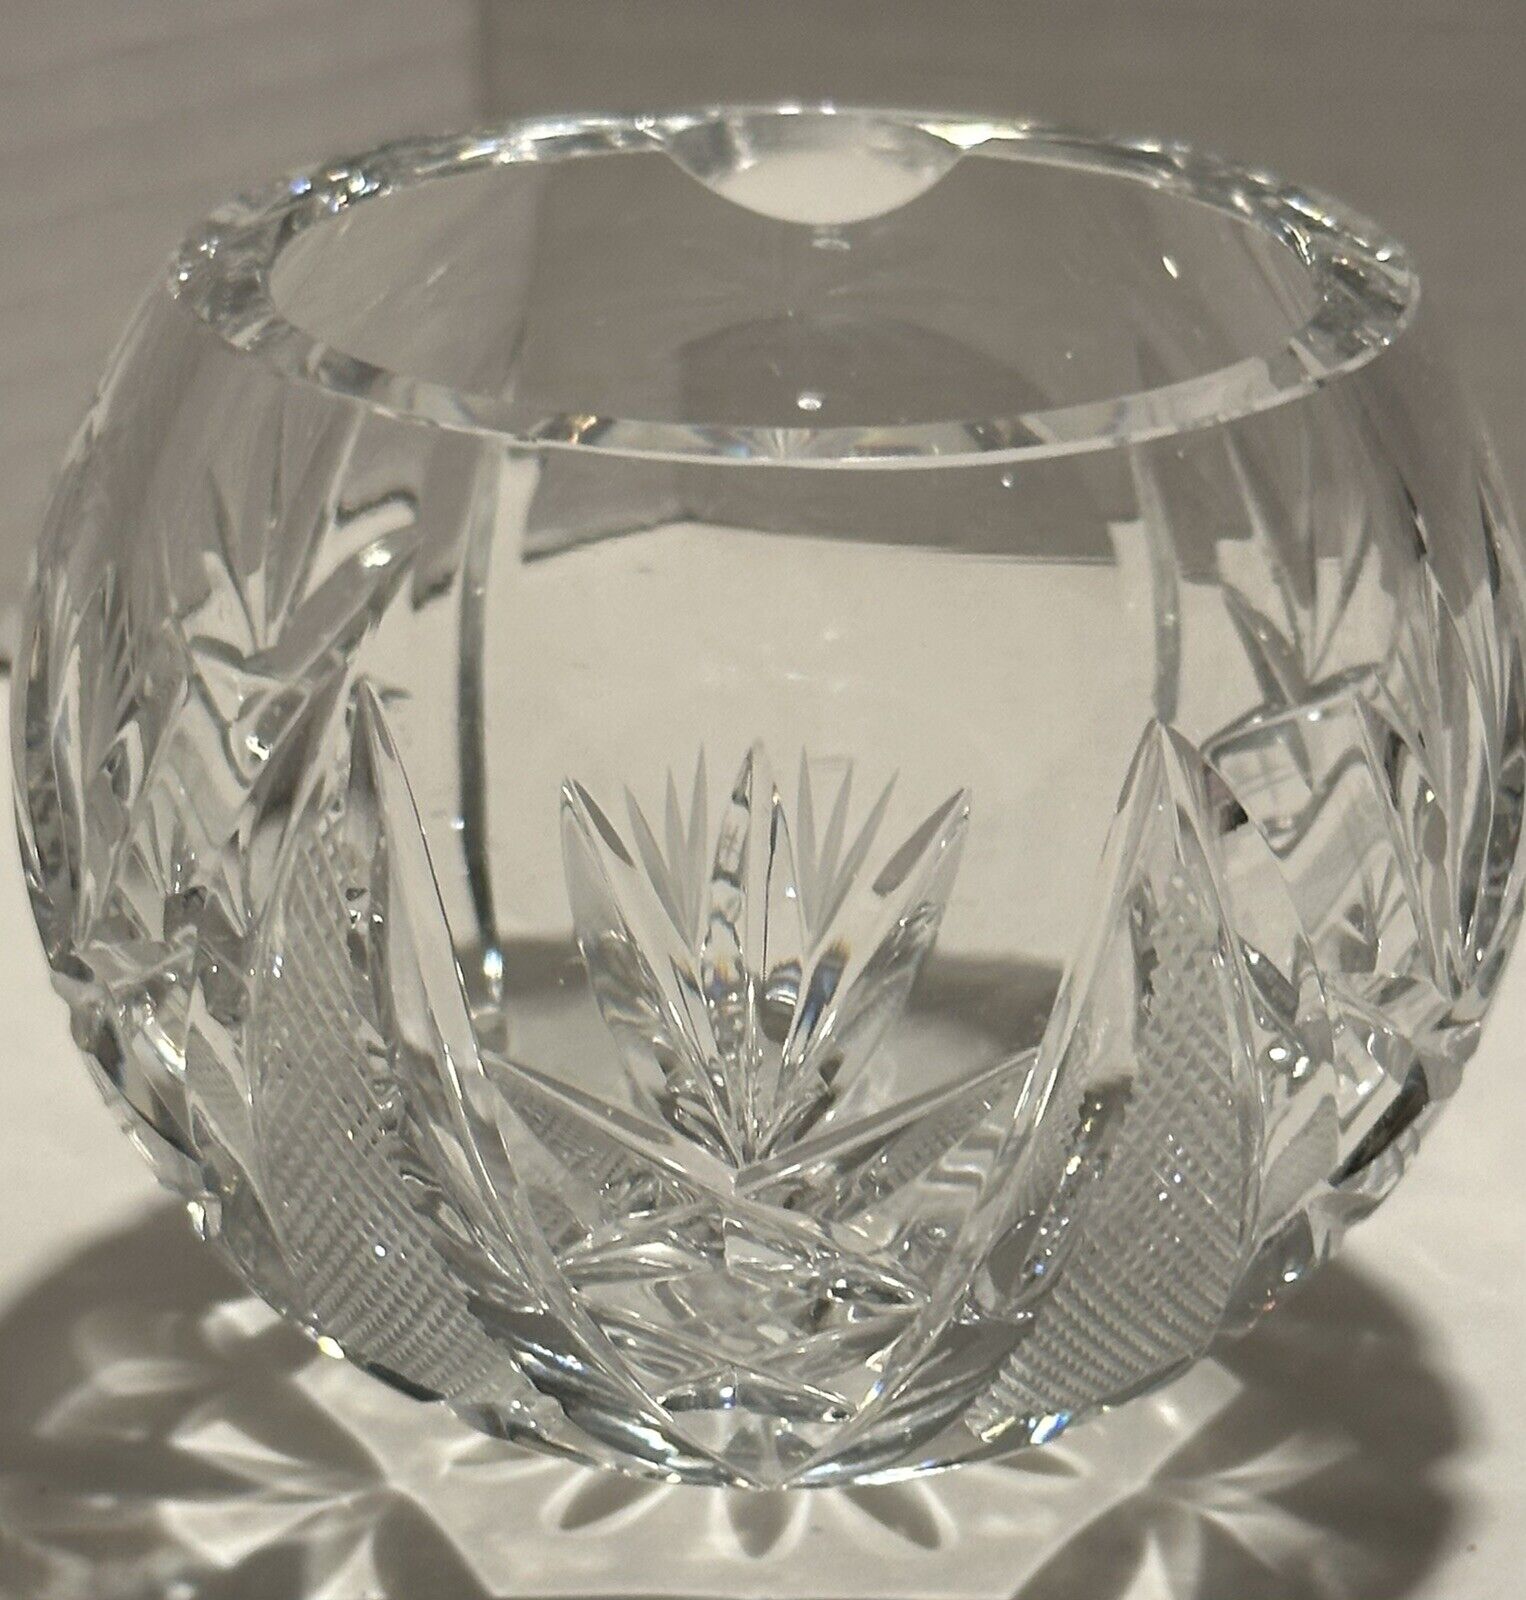 Vintage Cut Crystal Candle Holder Votive Candle Holder Heavy Lead Crystal Bowl